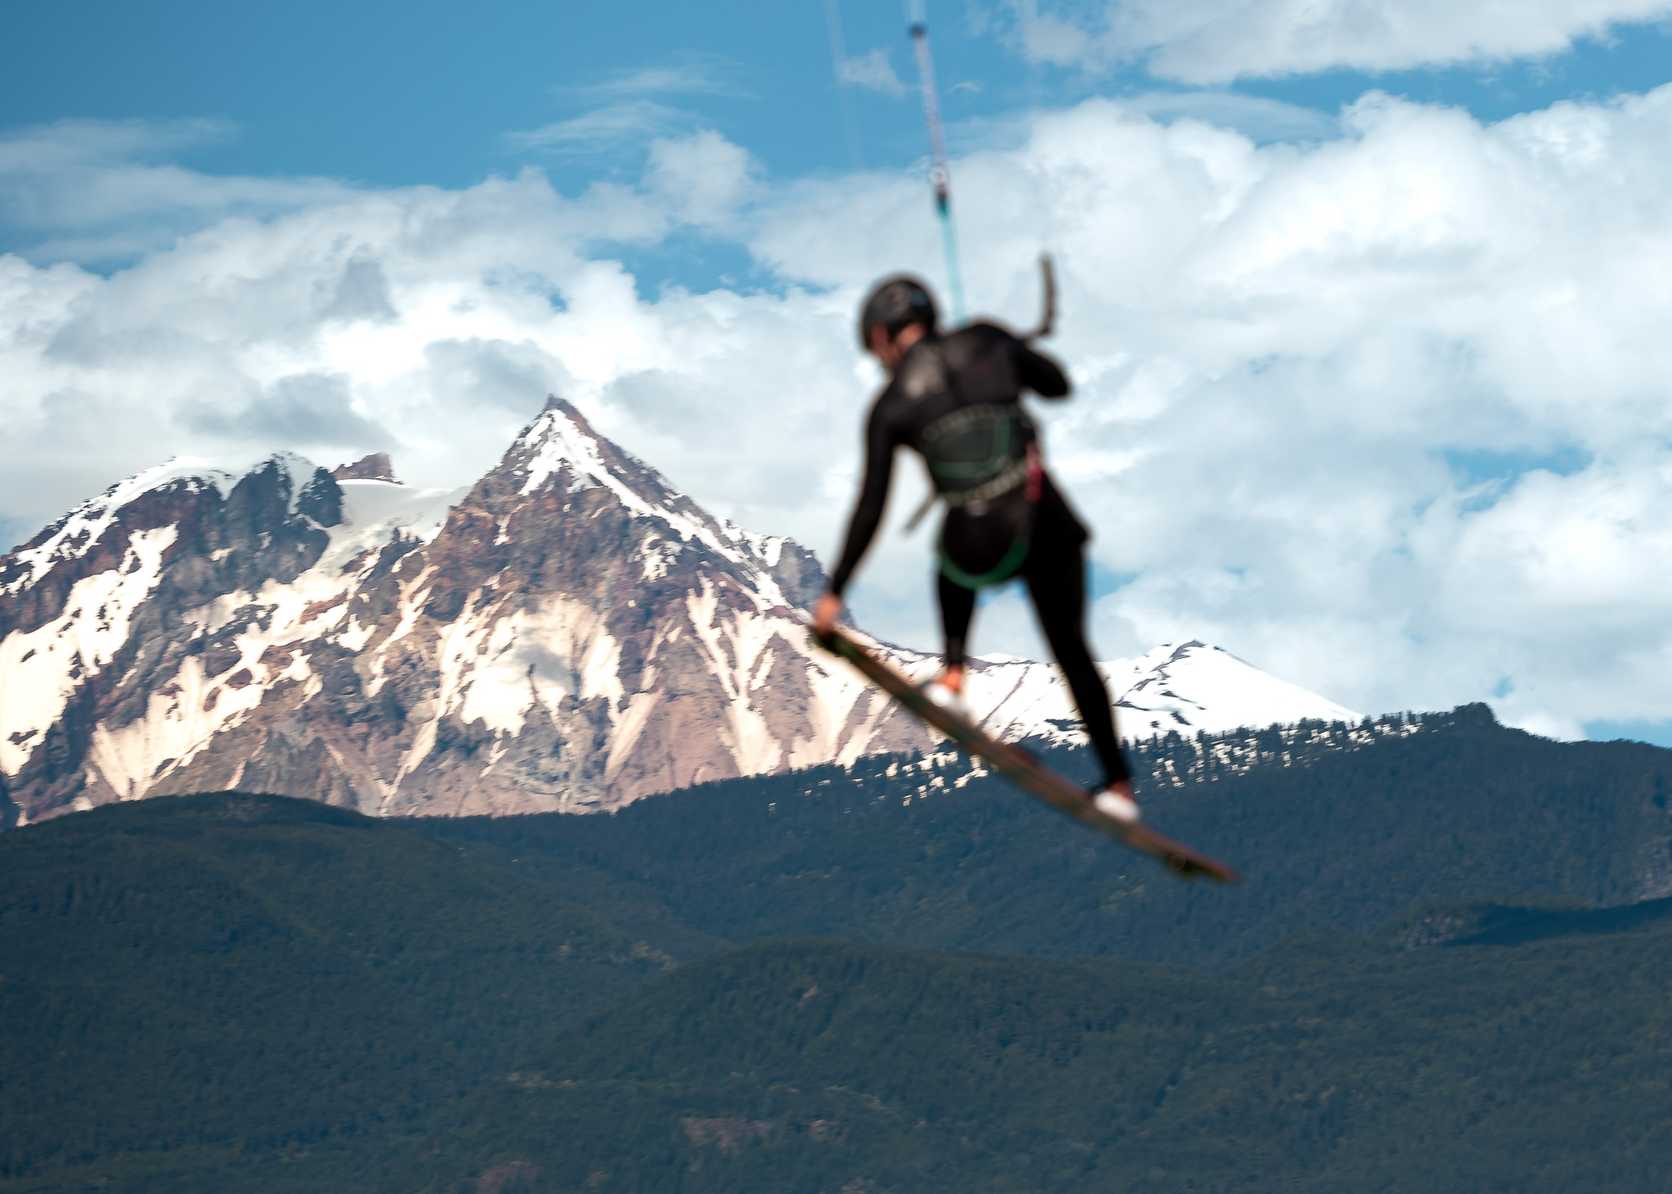 "Freestyle kiteboarder in Squamish"